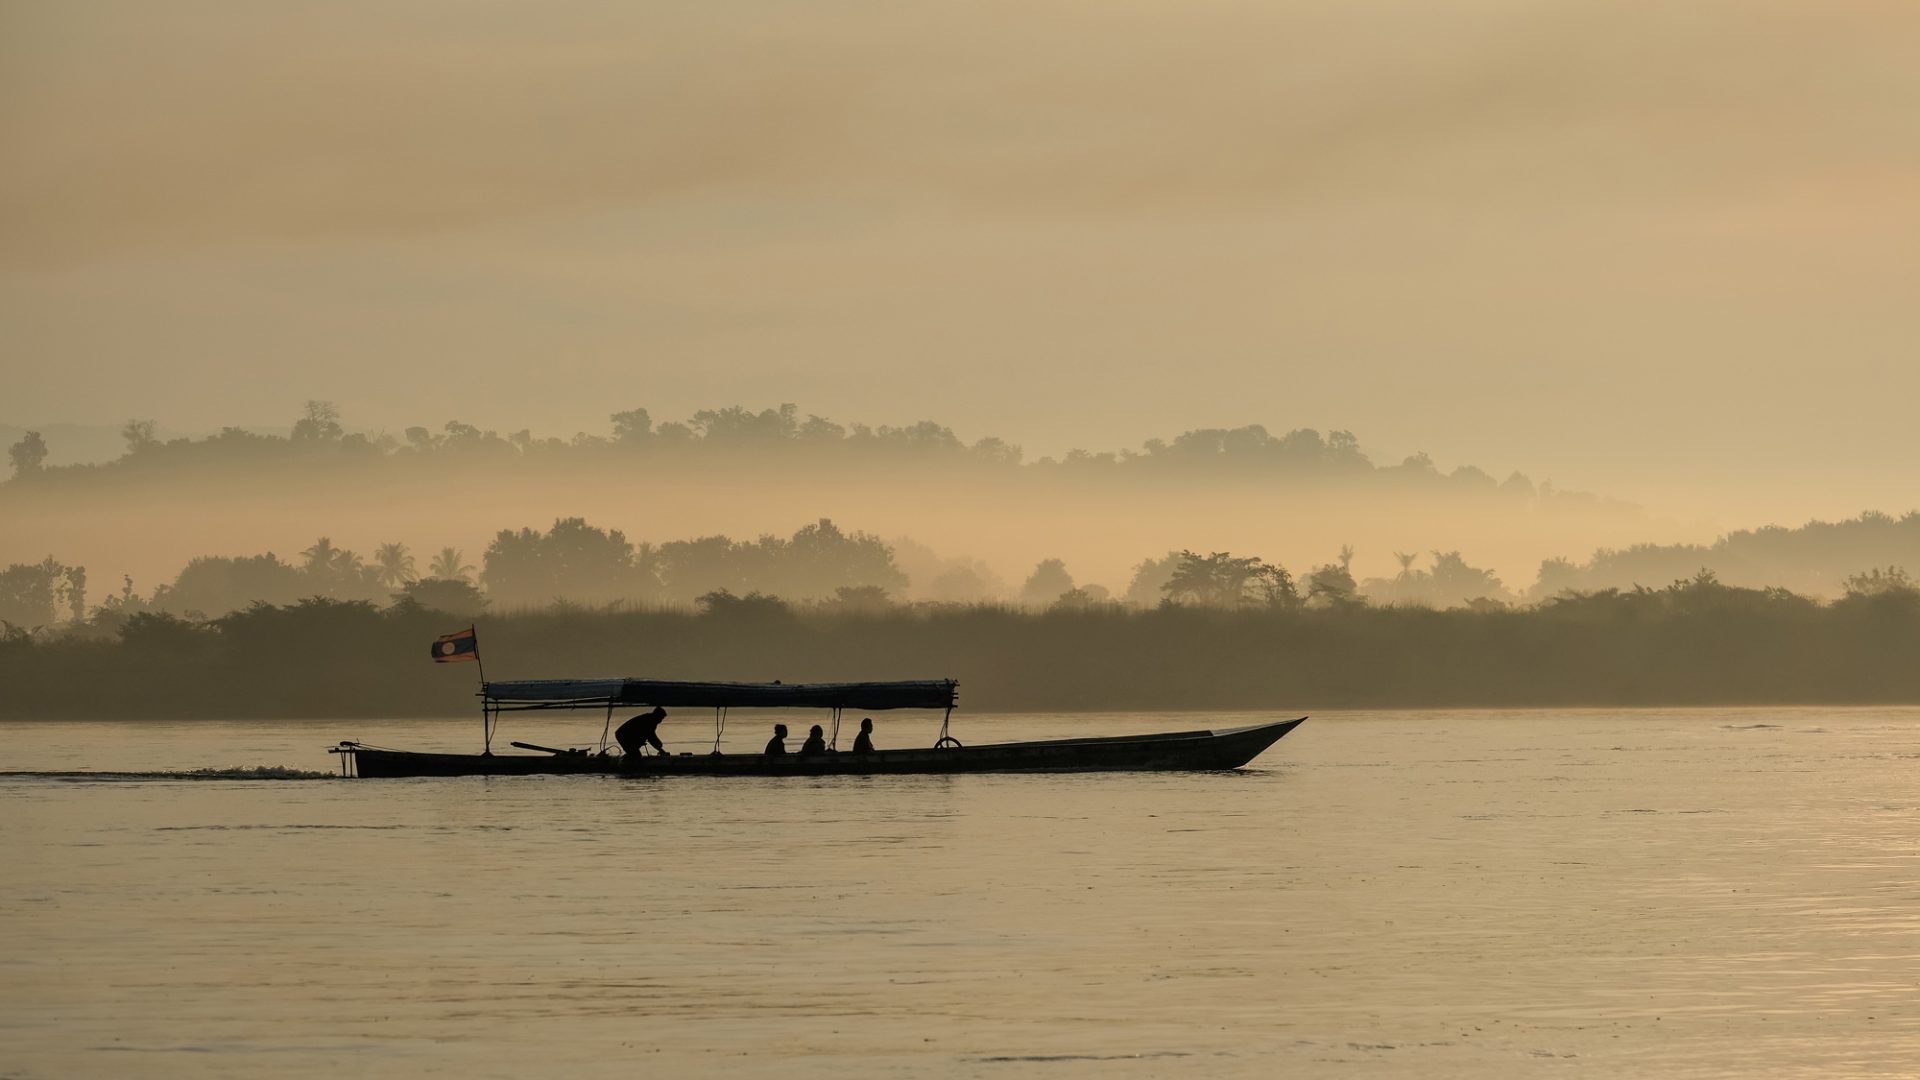 Boat sailing along the Mekon River in a misty sunrise